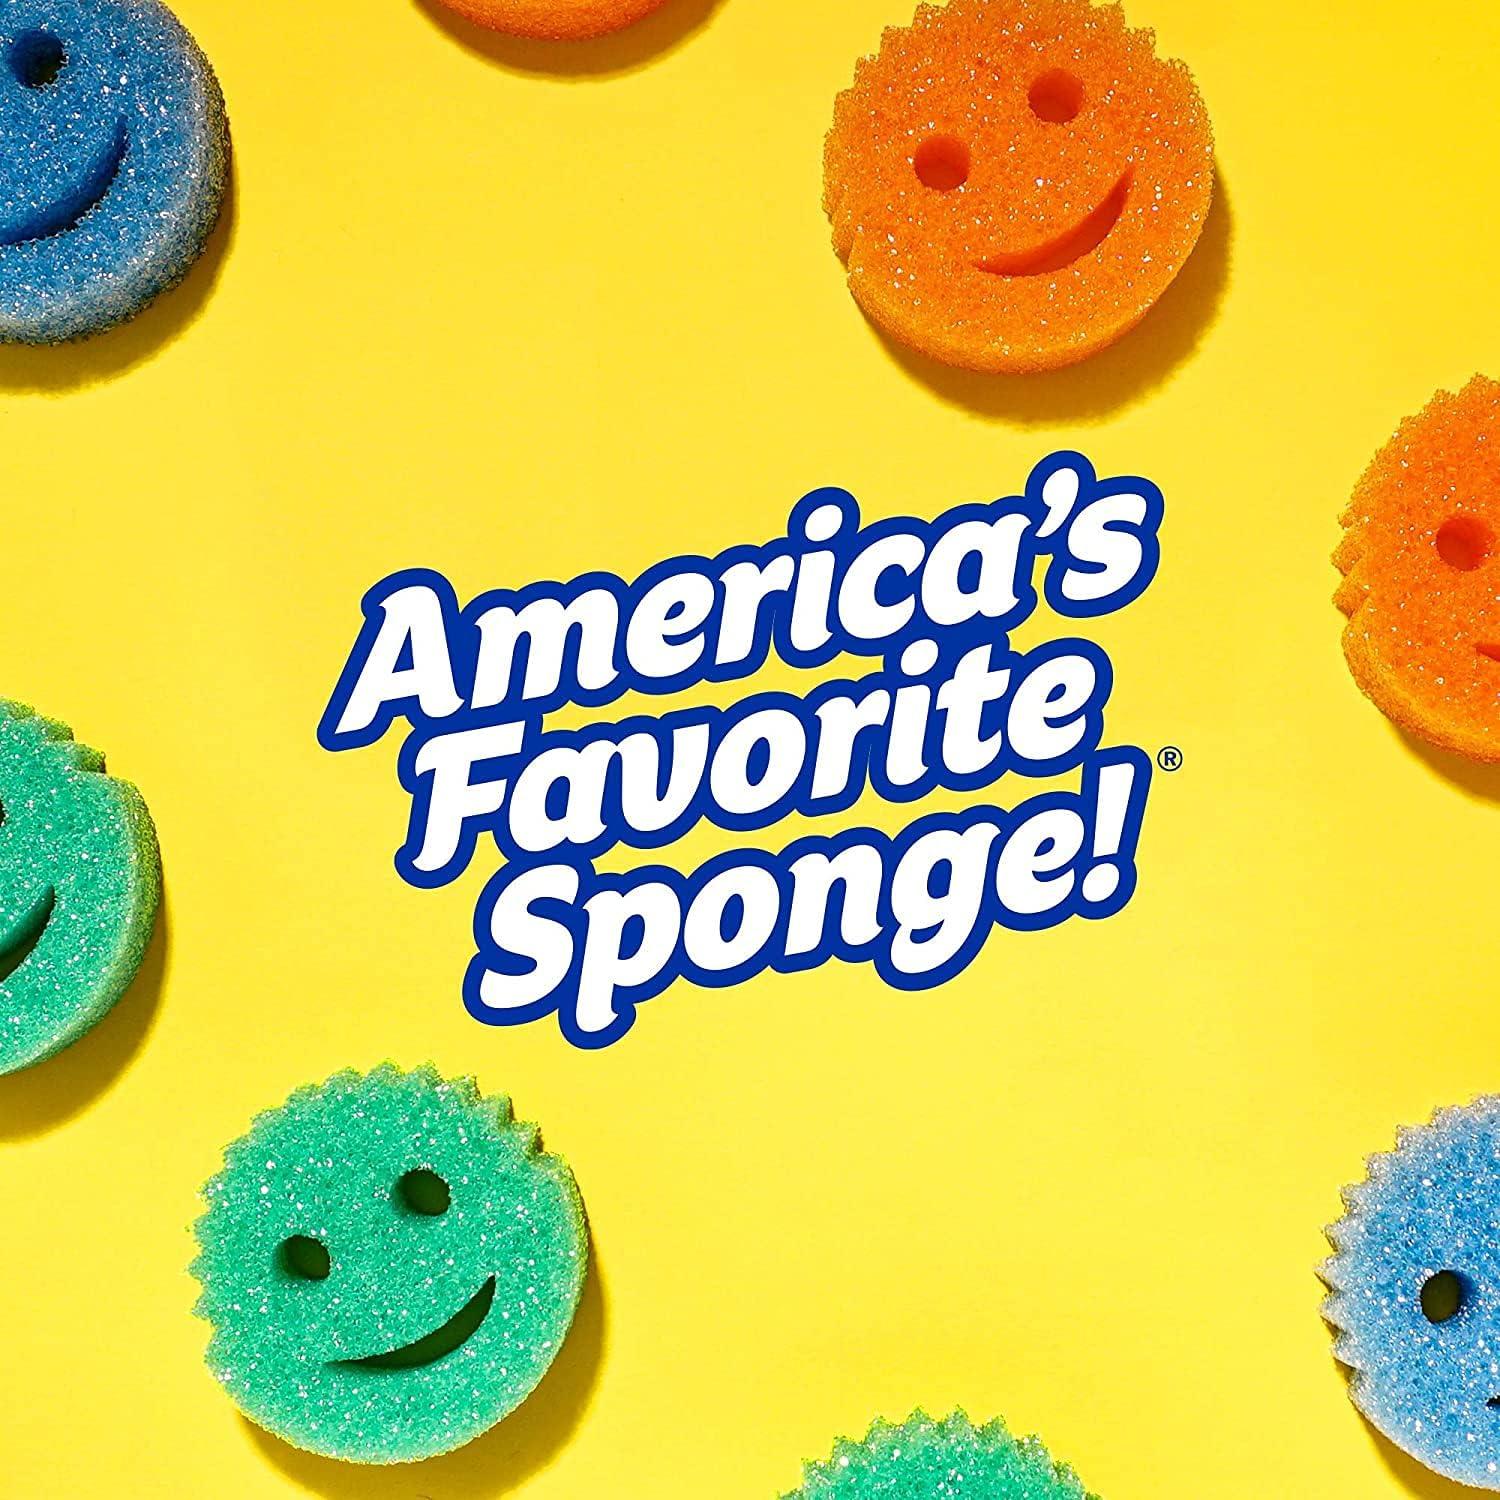 Scrub Daddy Sponge Set Color Variety Pack - Scratch-Free